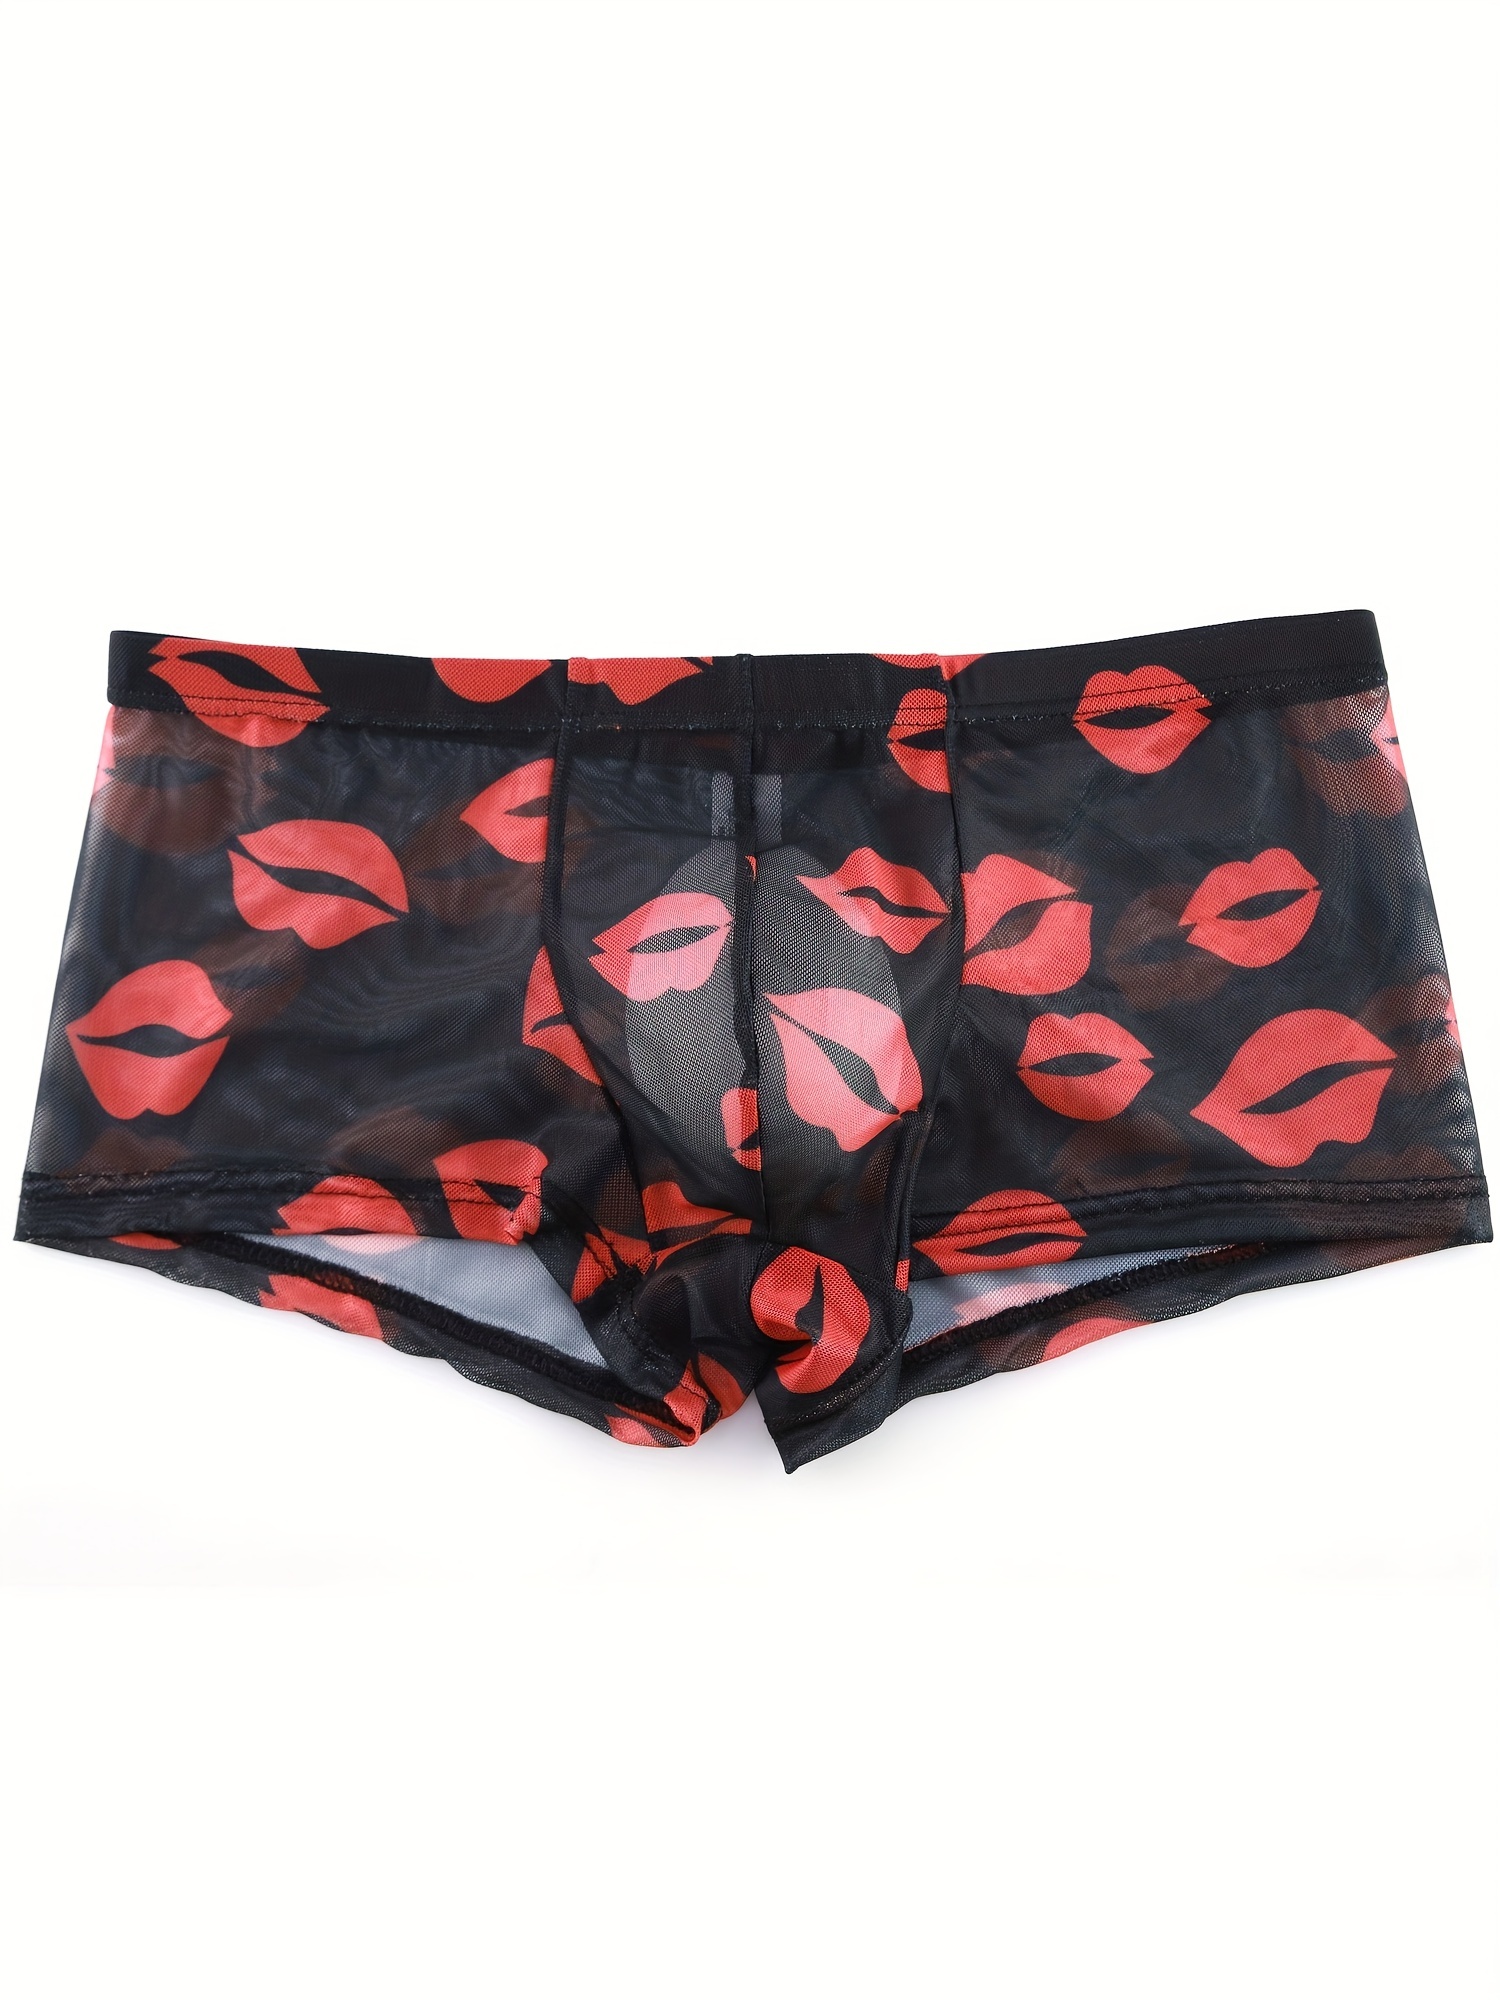 My Bloody Valentine Boxers Custom Photo Boxers Men's Underwear